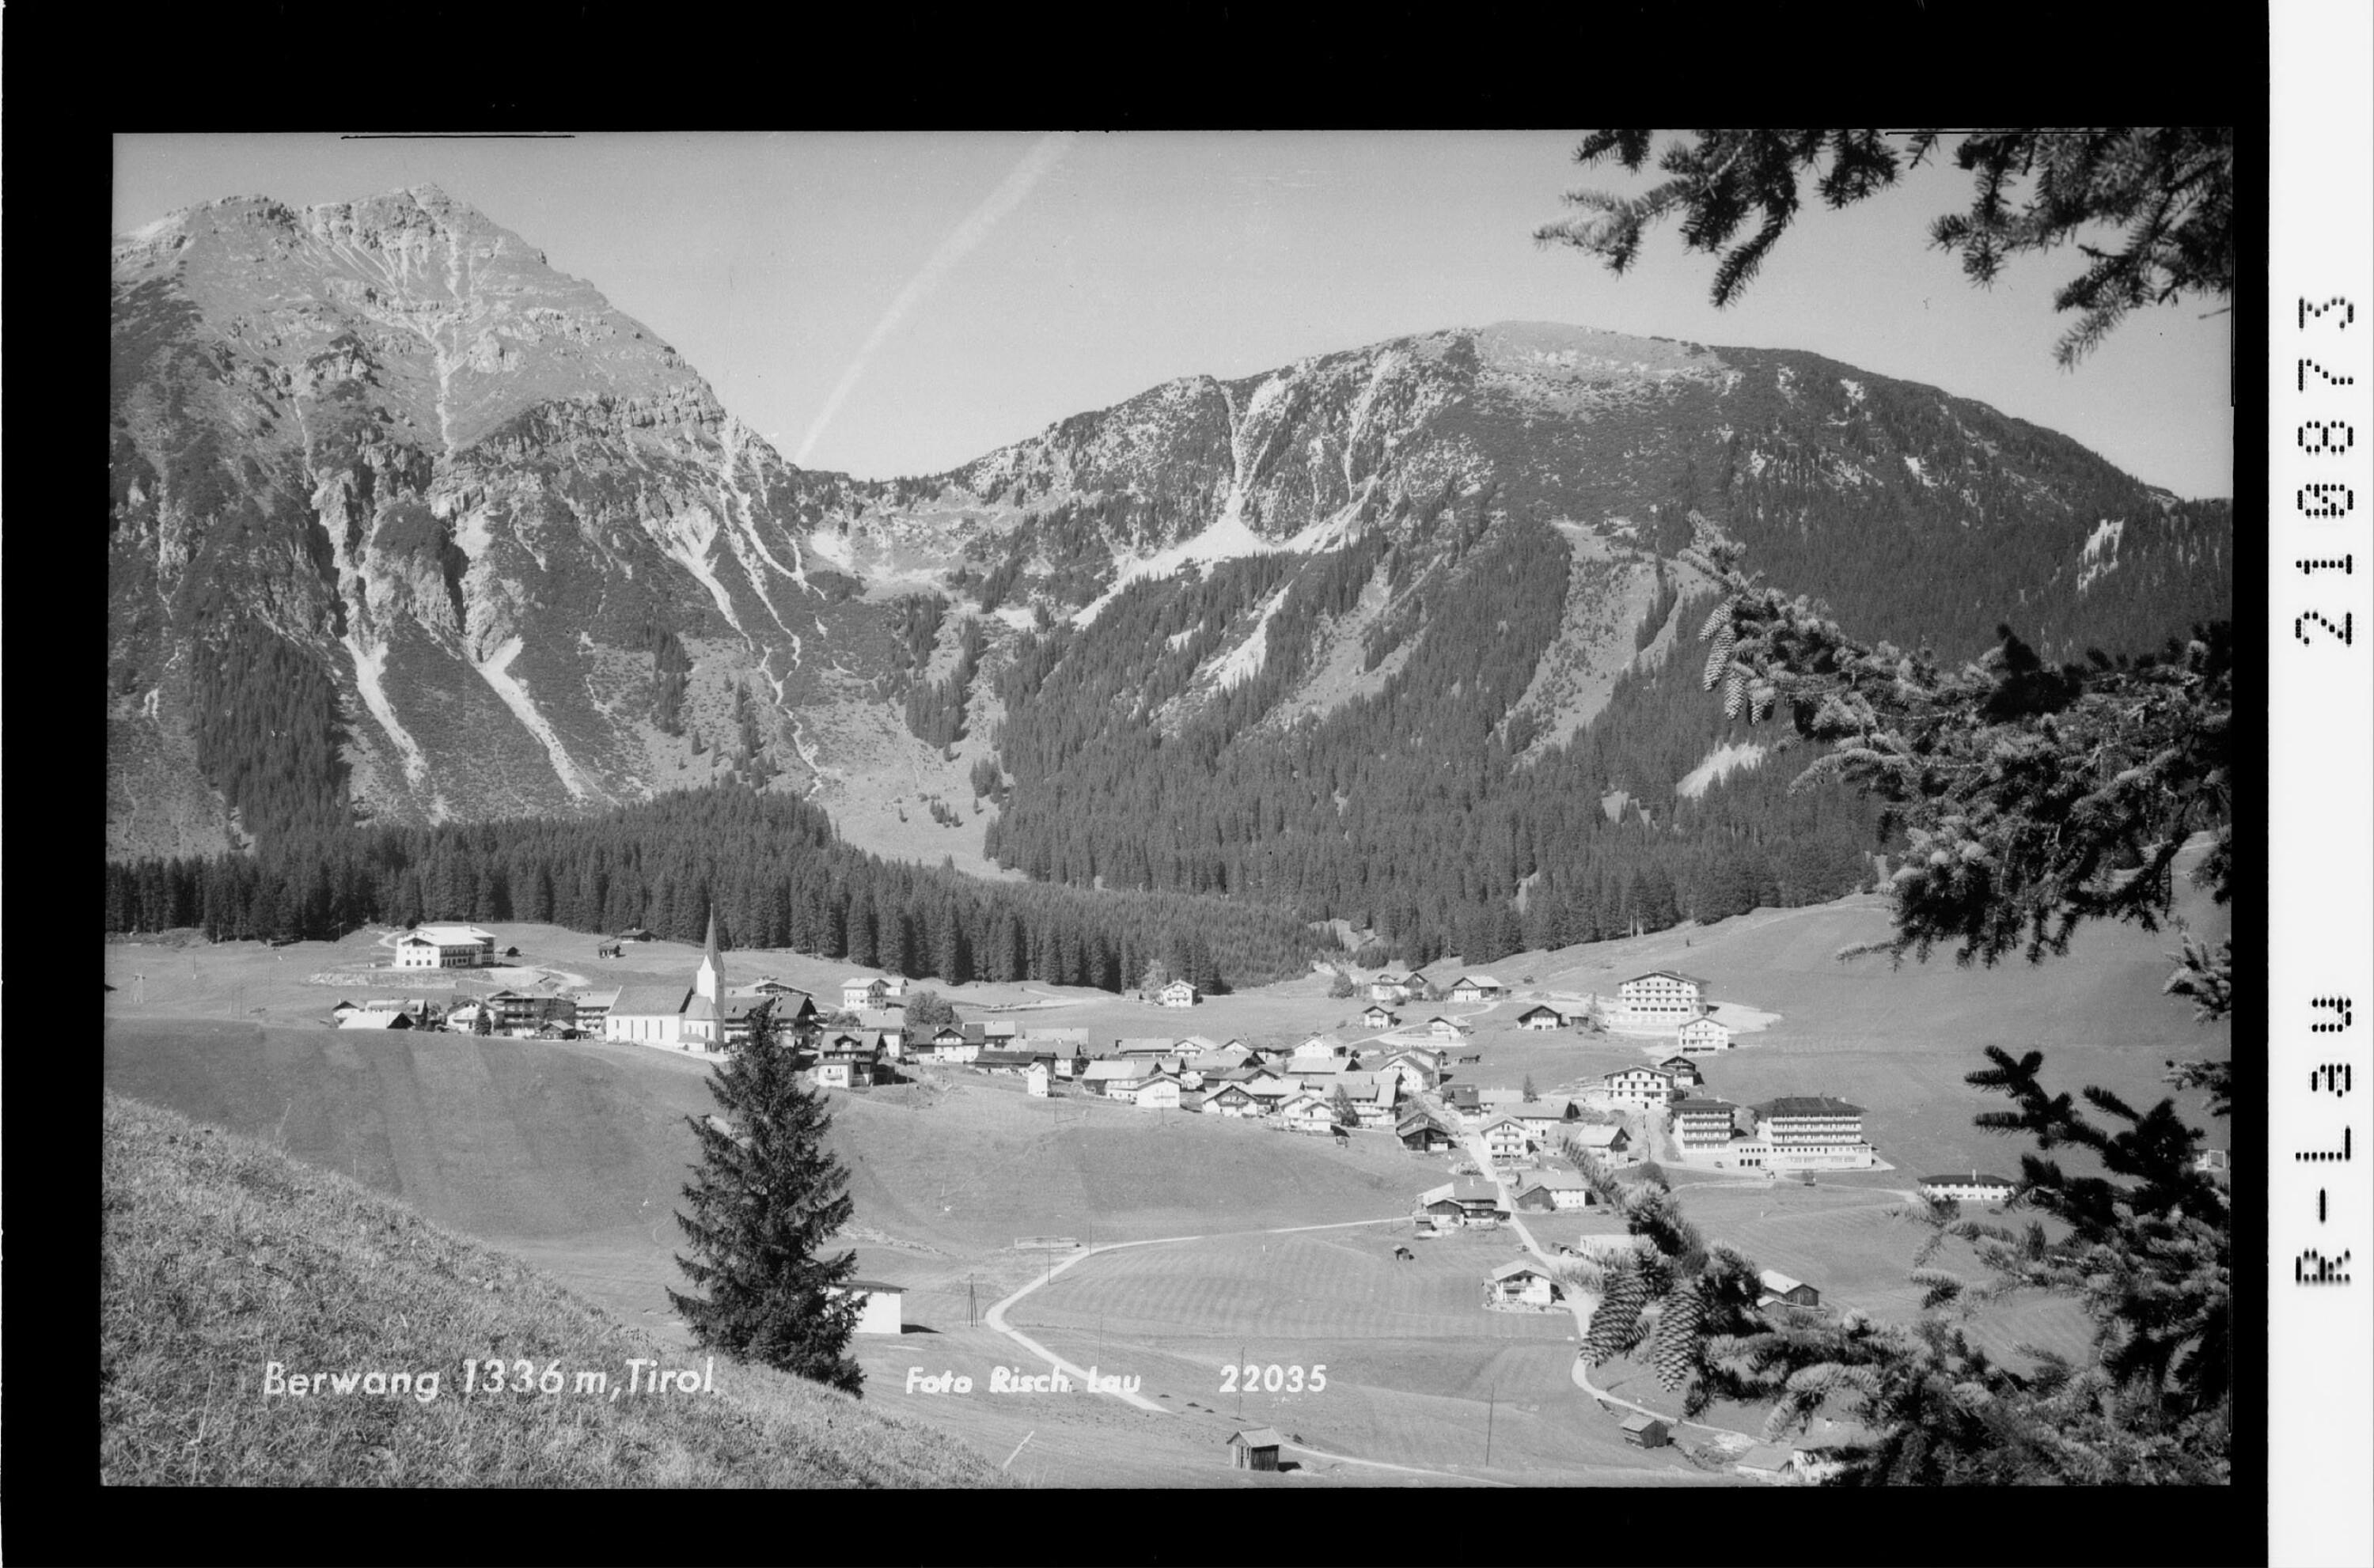 Berwang 1336 m, Tirol></div>


    <hr>
    <div class=